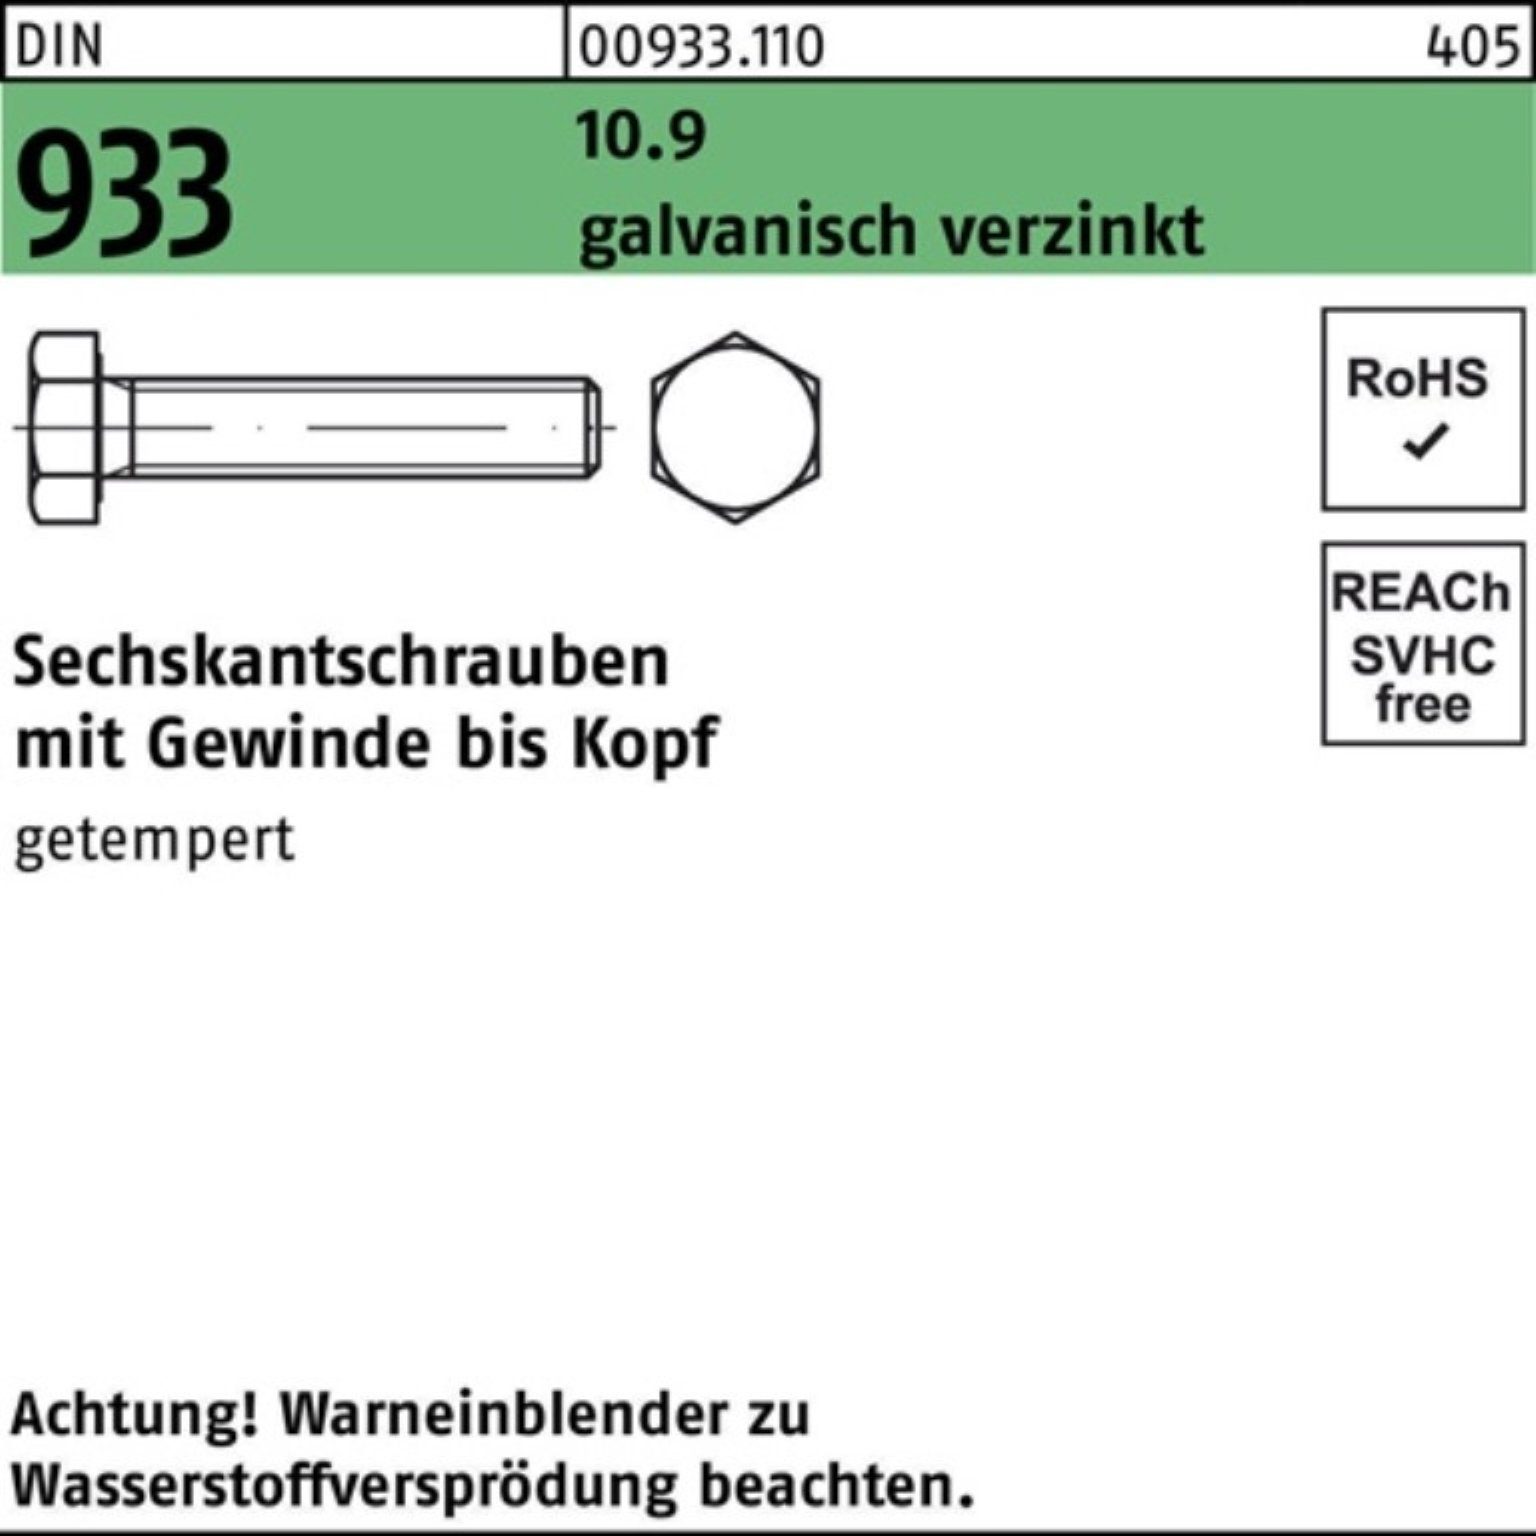 St galv.verz. 140 1 DIN 100er VG Pack Reyher Sechskantschraube Sechskantschraube 10.9 933 M30x